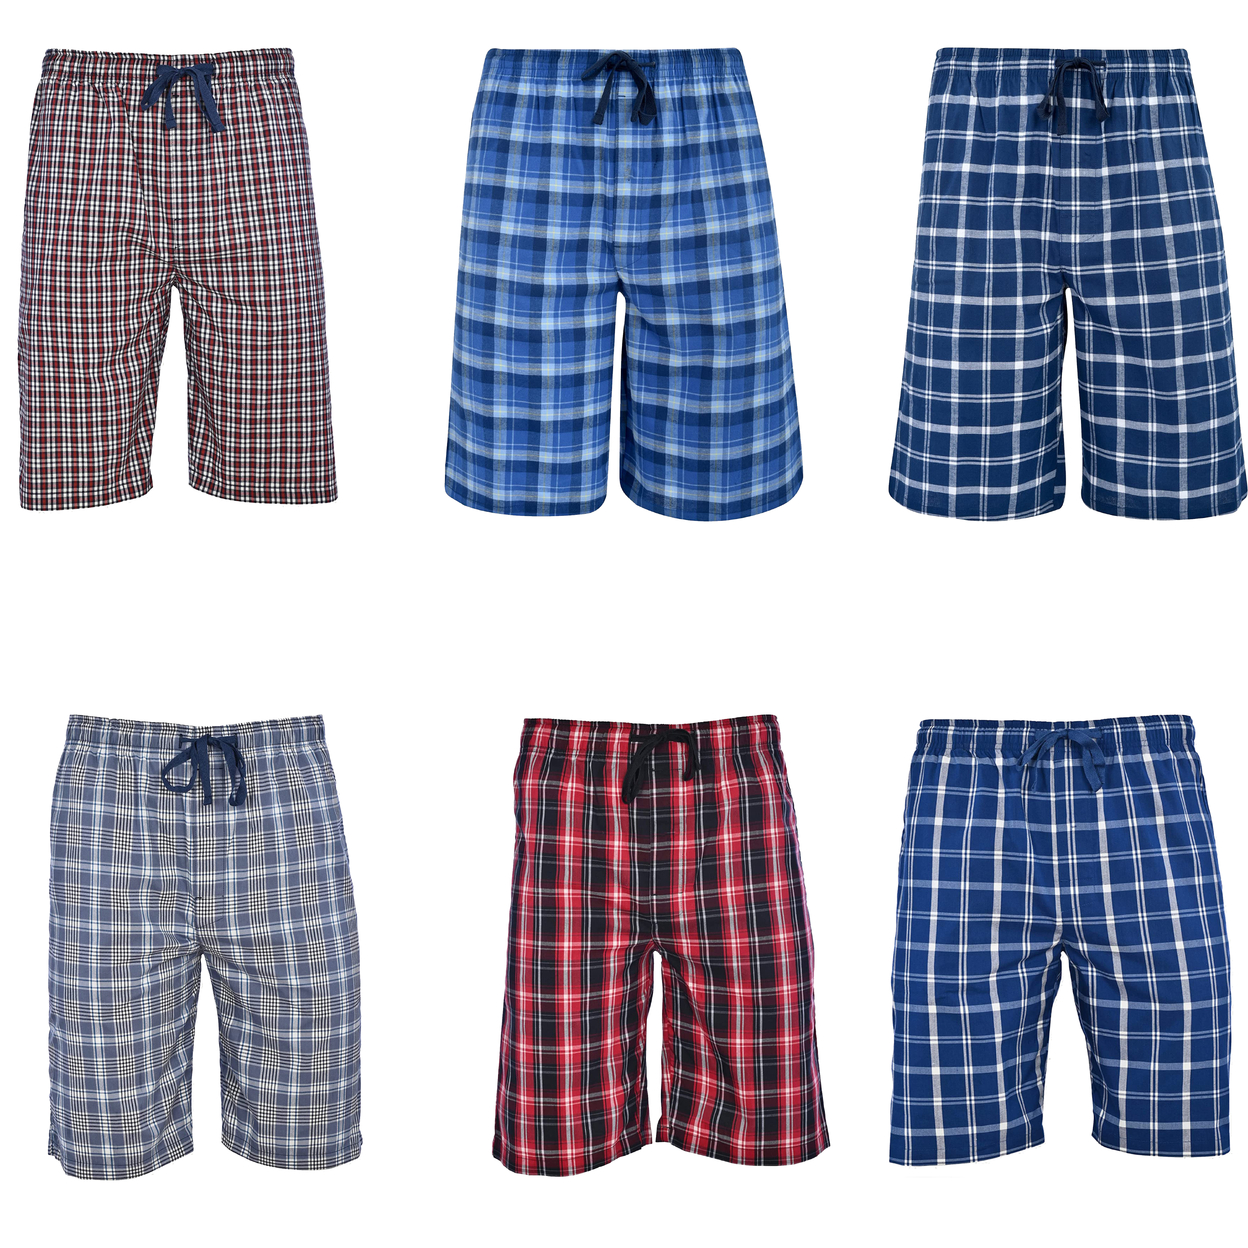 Men's Ultra-Soft Plaid Lounge Pajama Sleep Wear Shorts - Grey, Medium